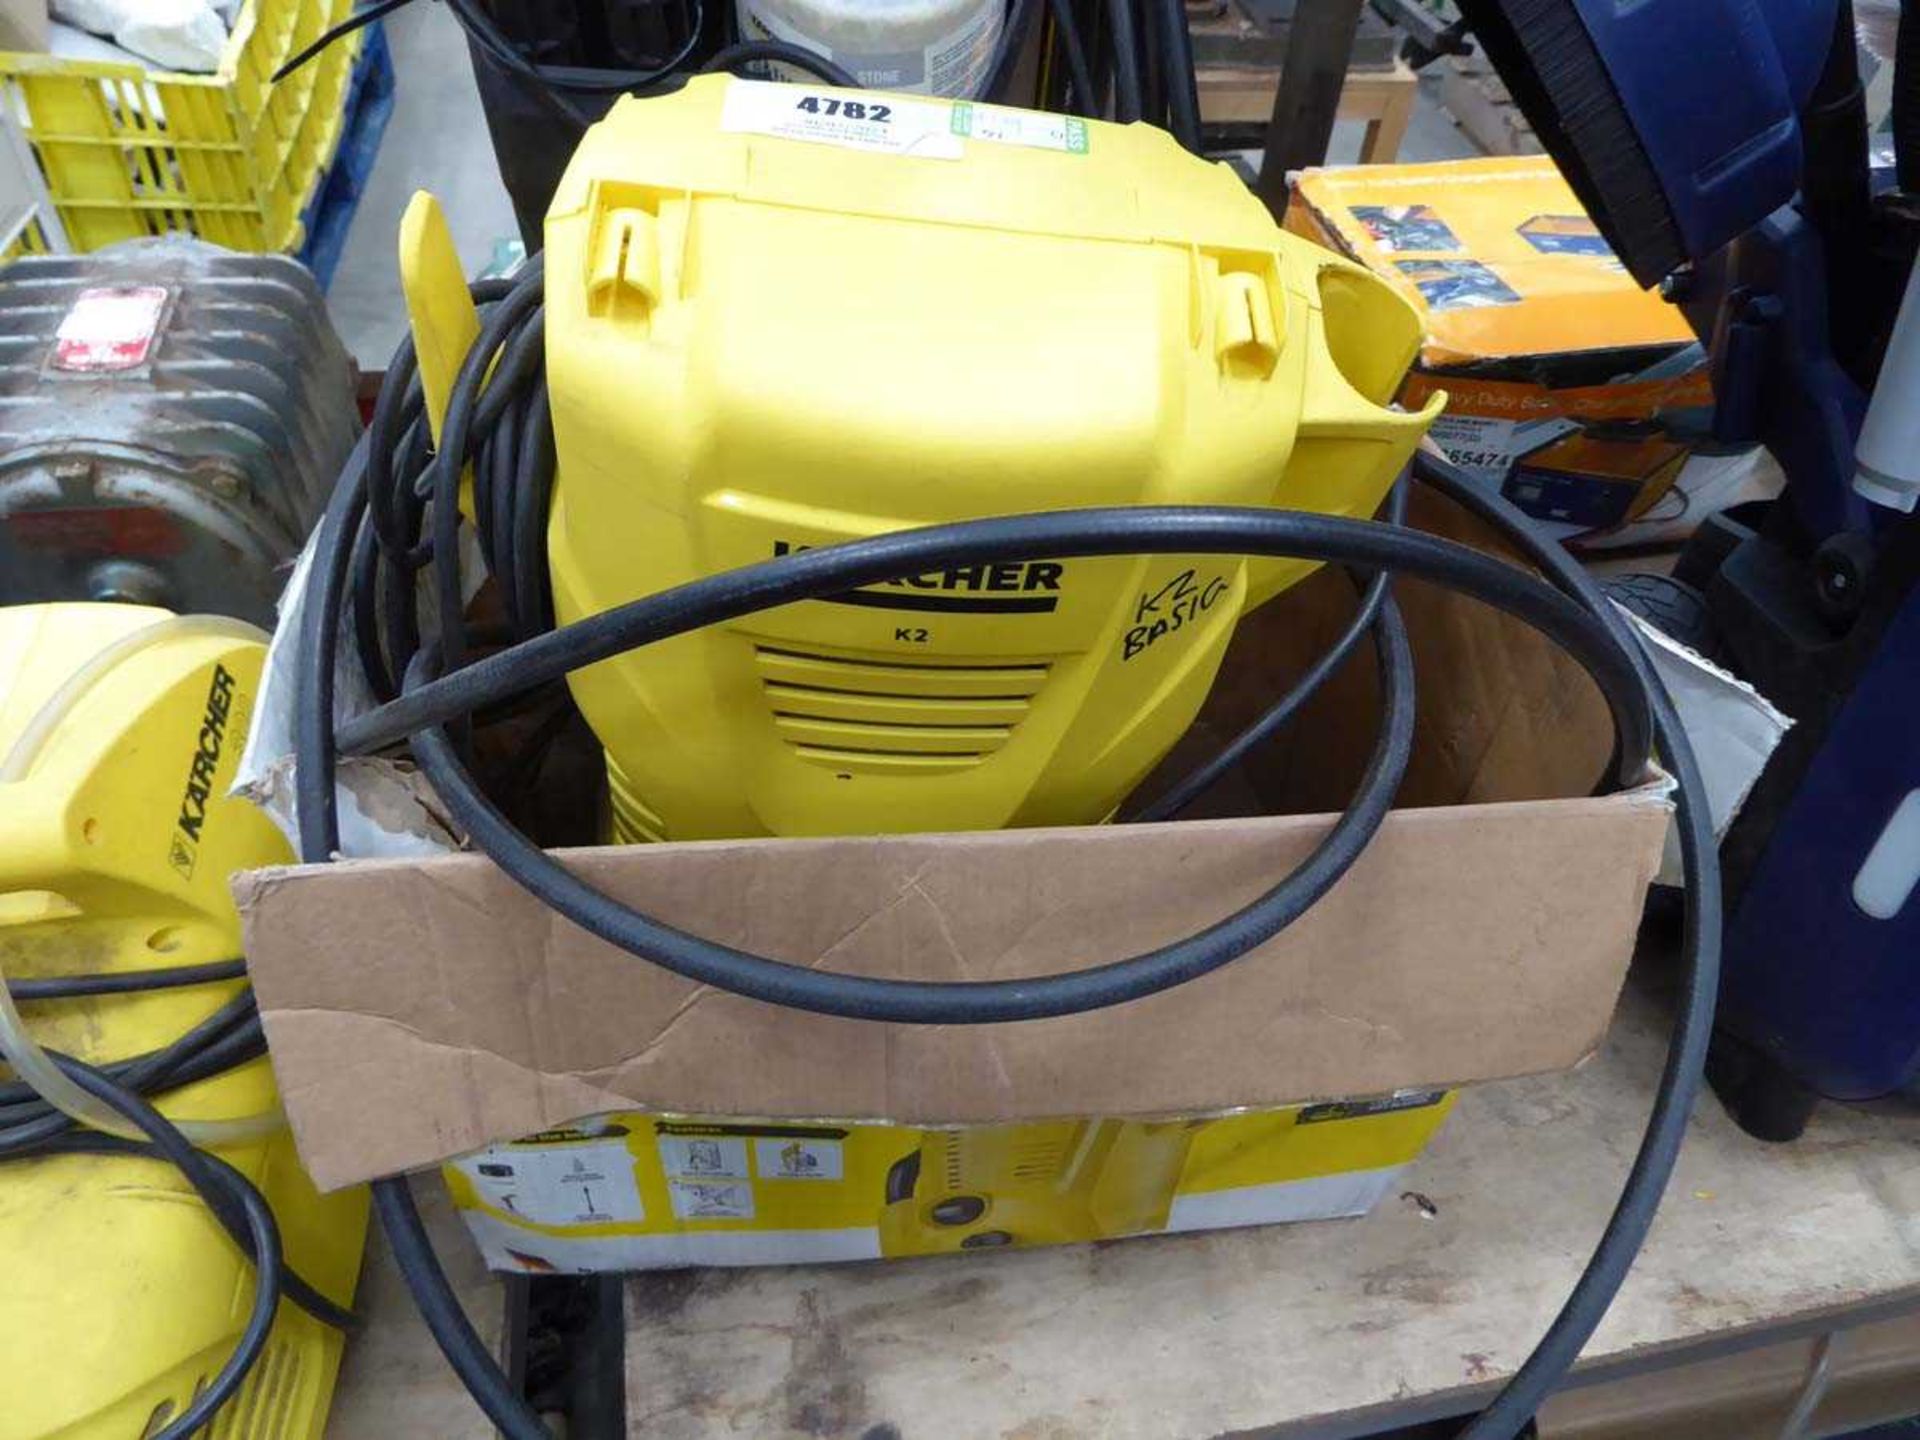 Karcher K2 electric pressure washer with hose